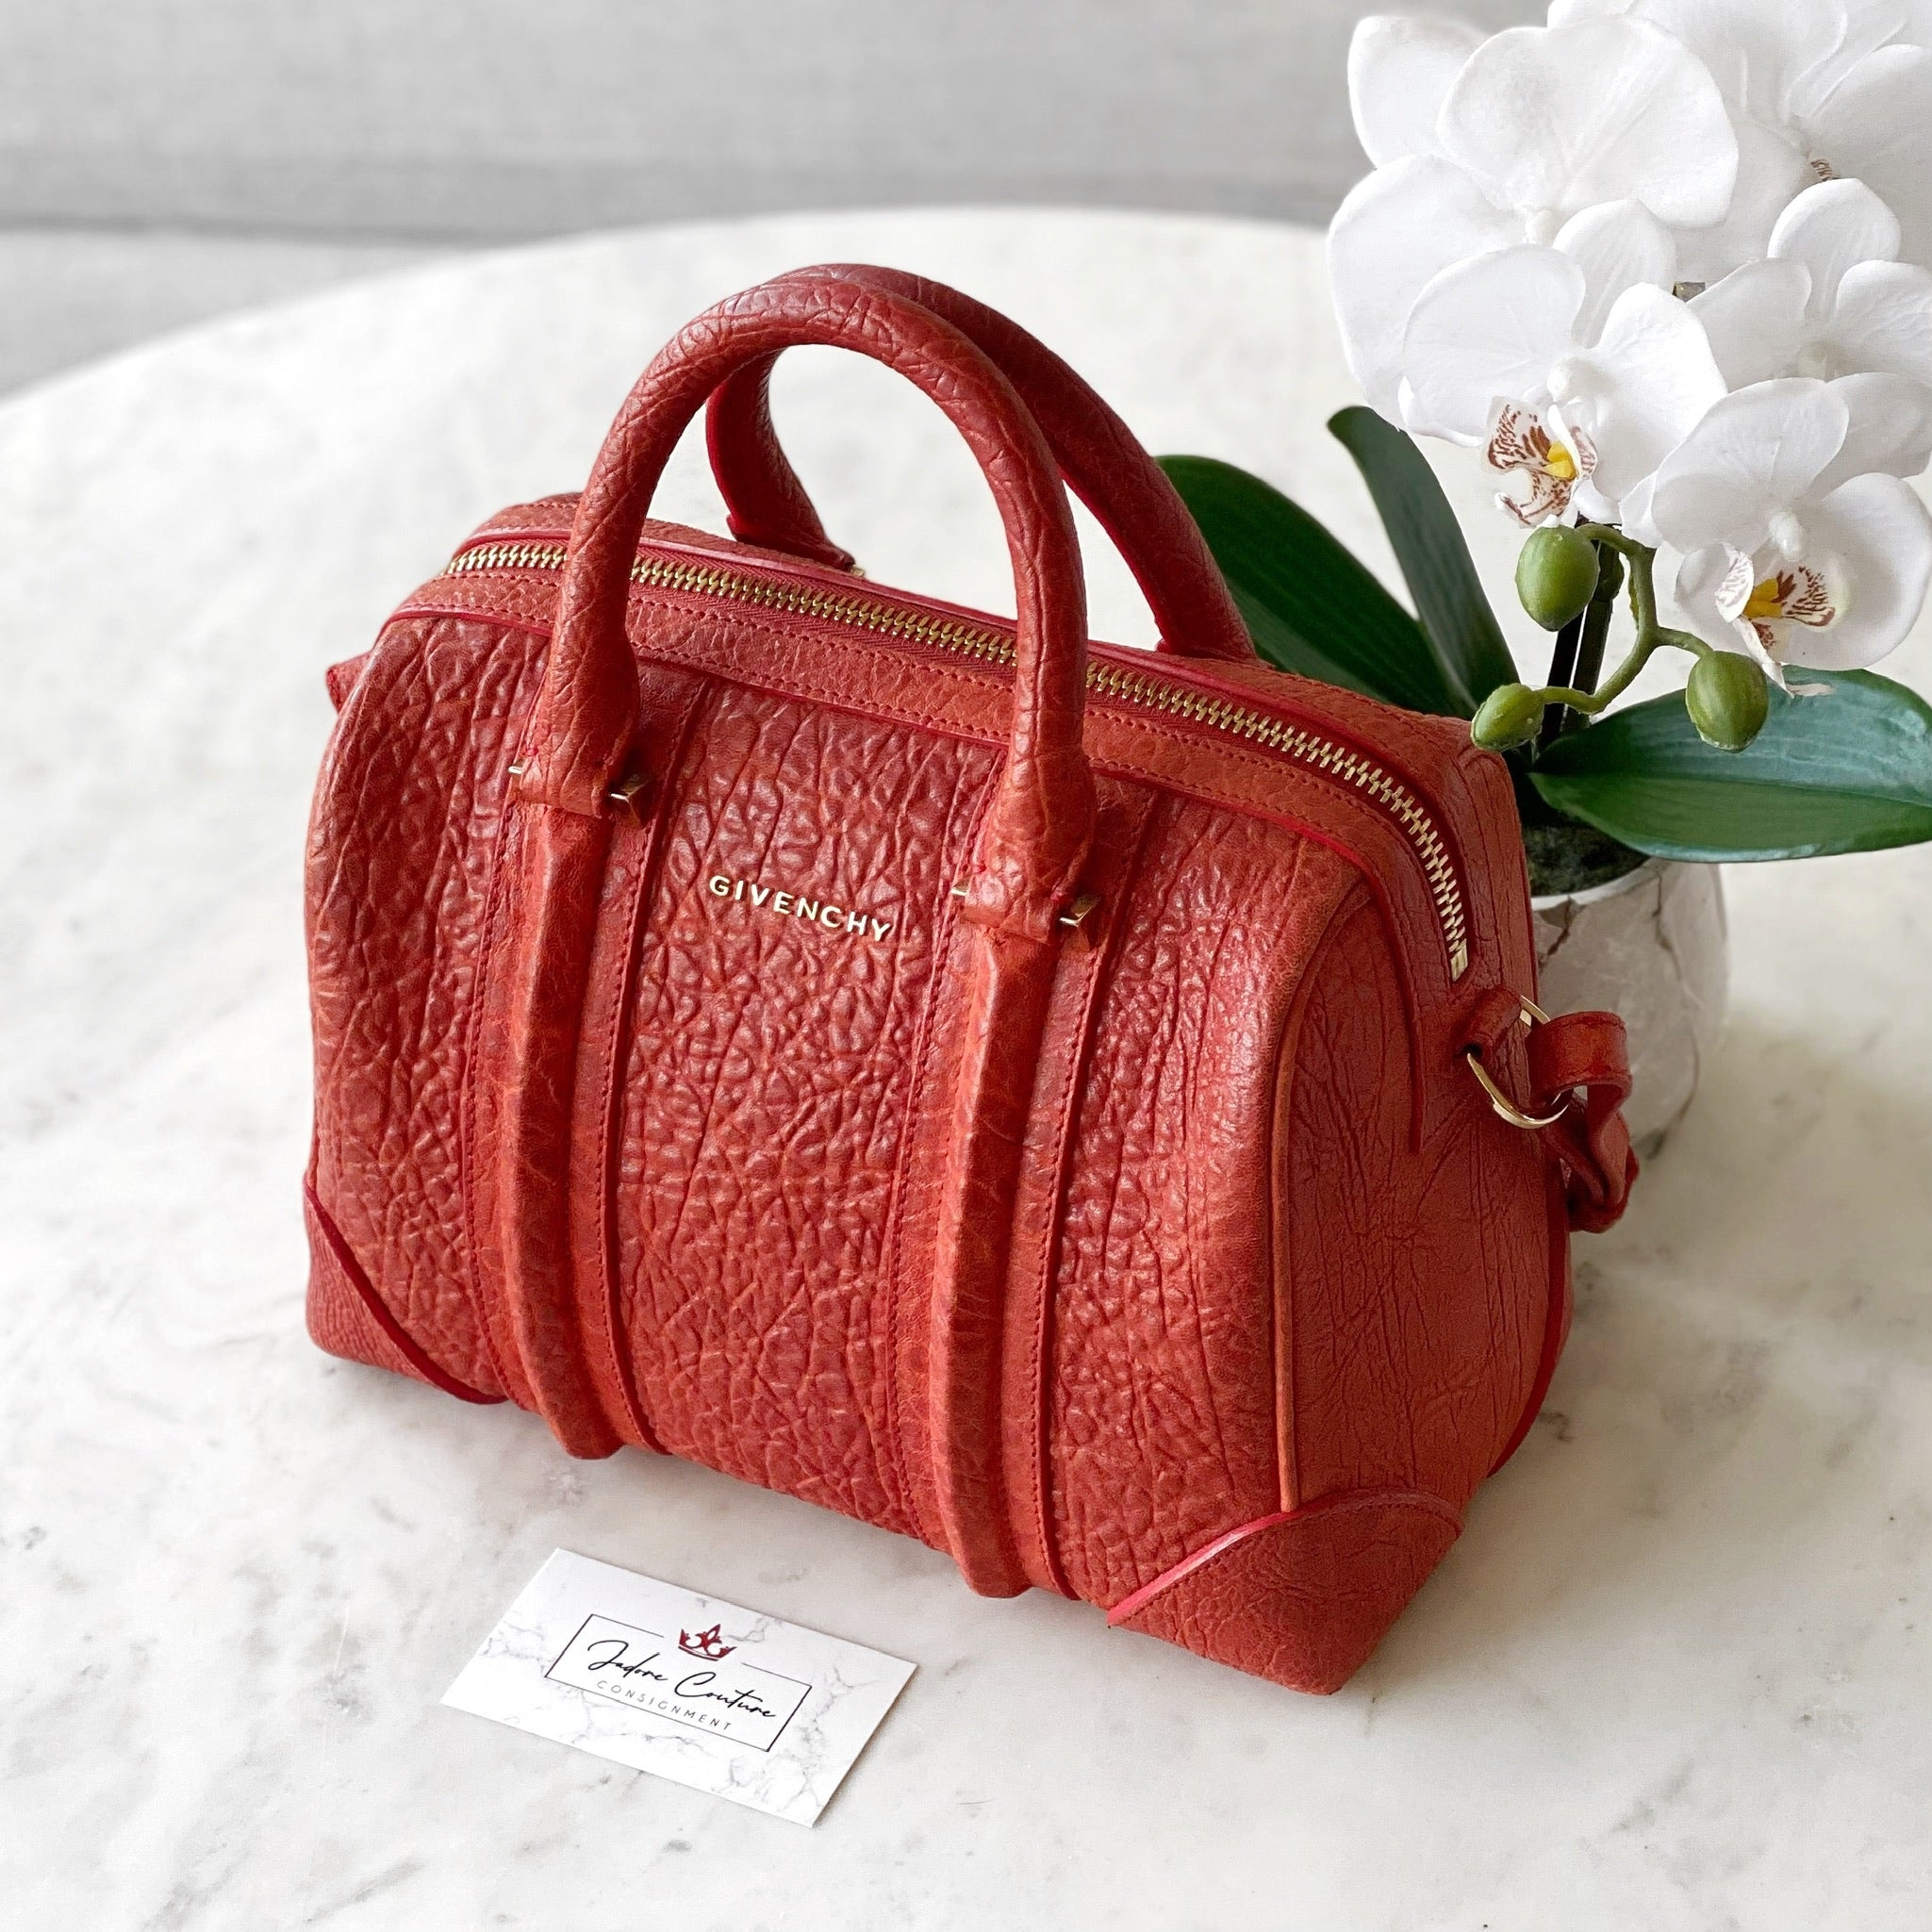 Givenchy Poppy Red Mini Lucrezia Duffel Bag